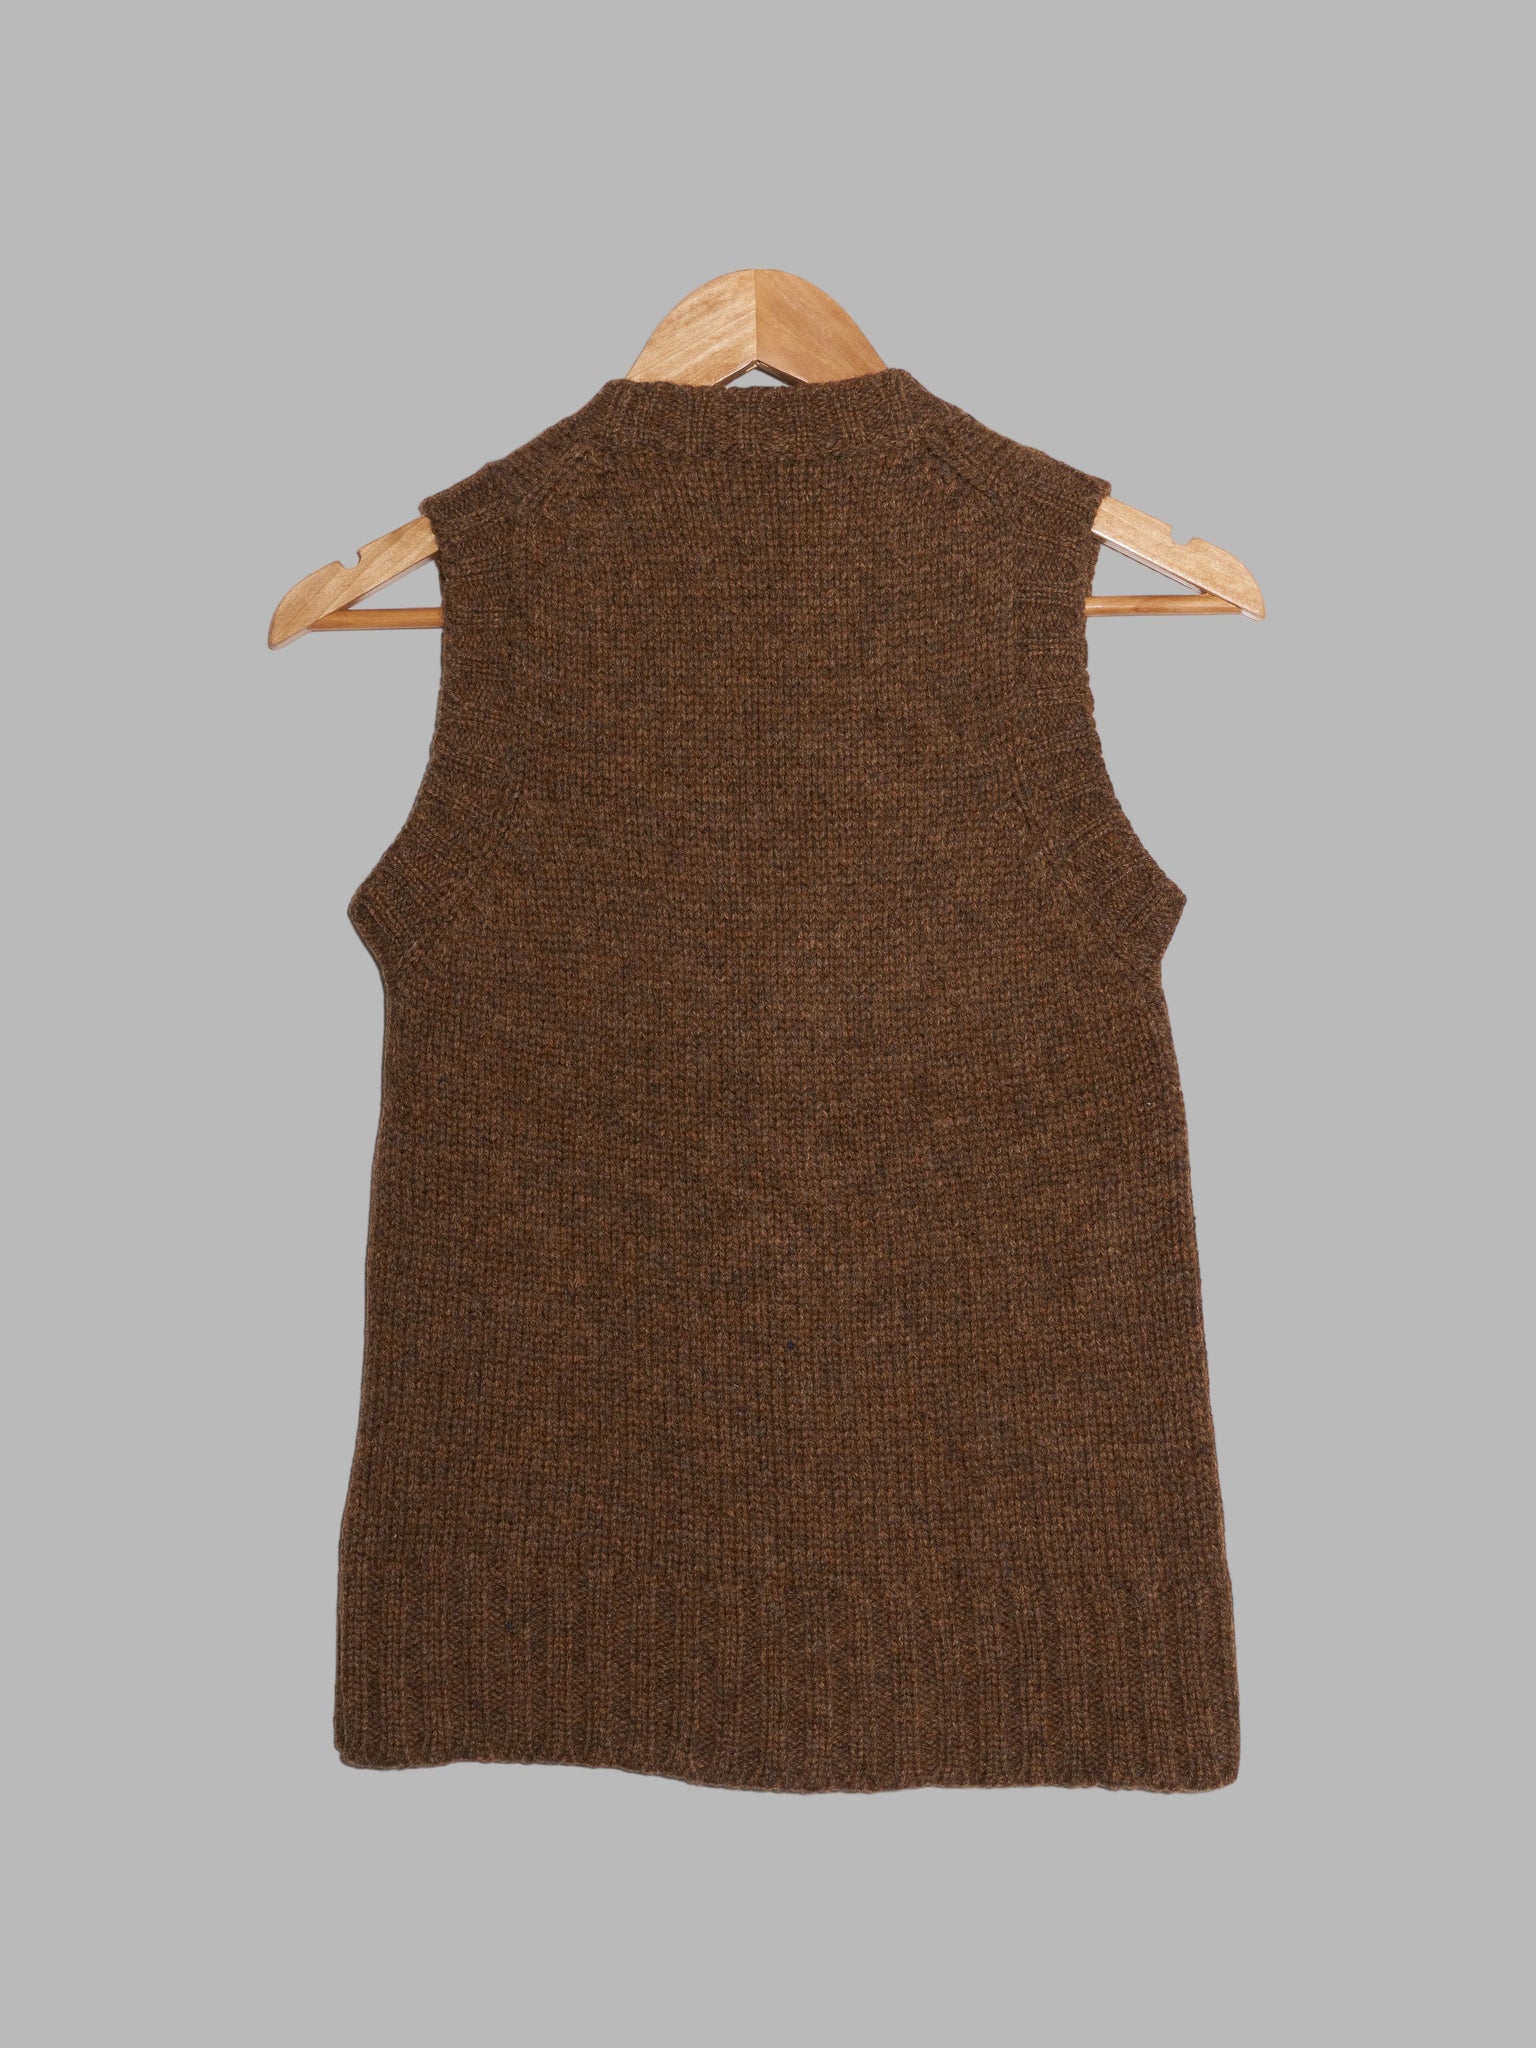 Junya Watanabe Comme des Garcons winter 1993 brown wool knitted vest